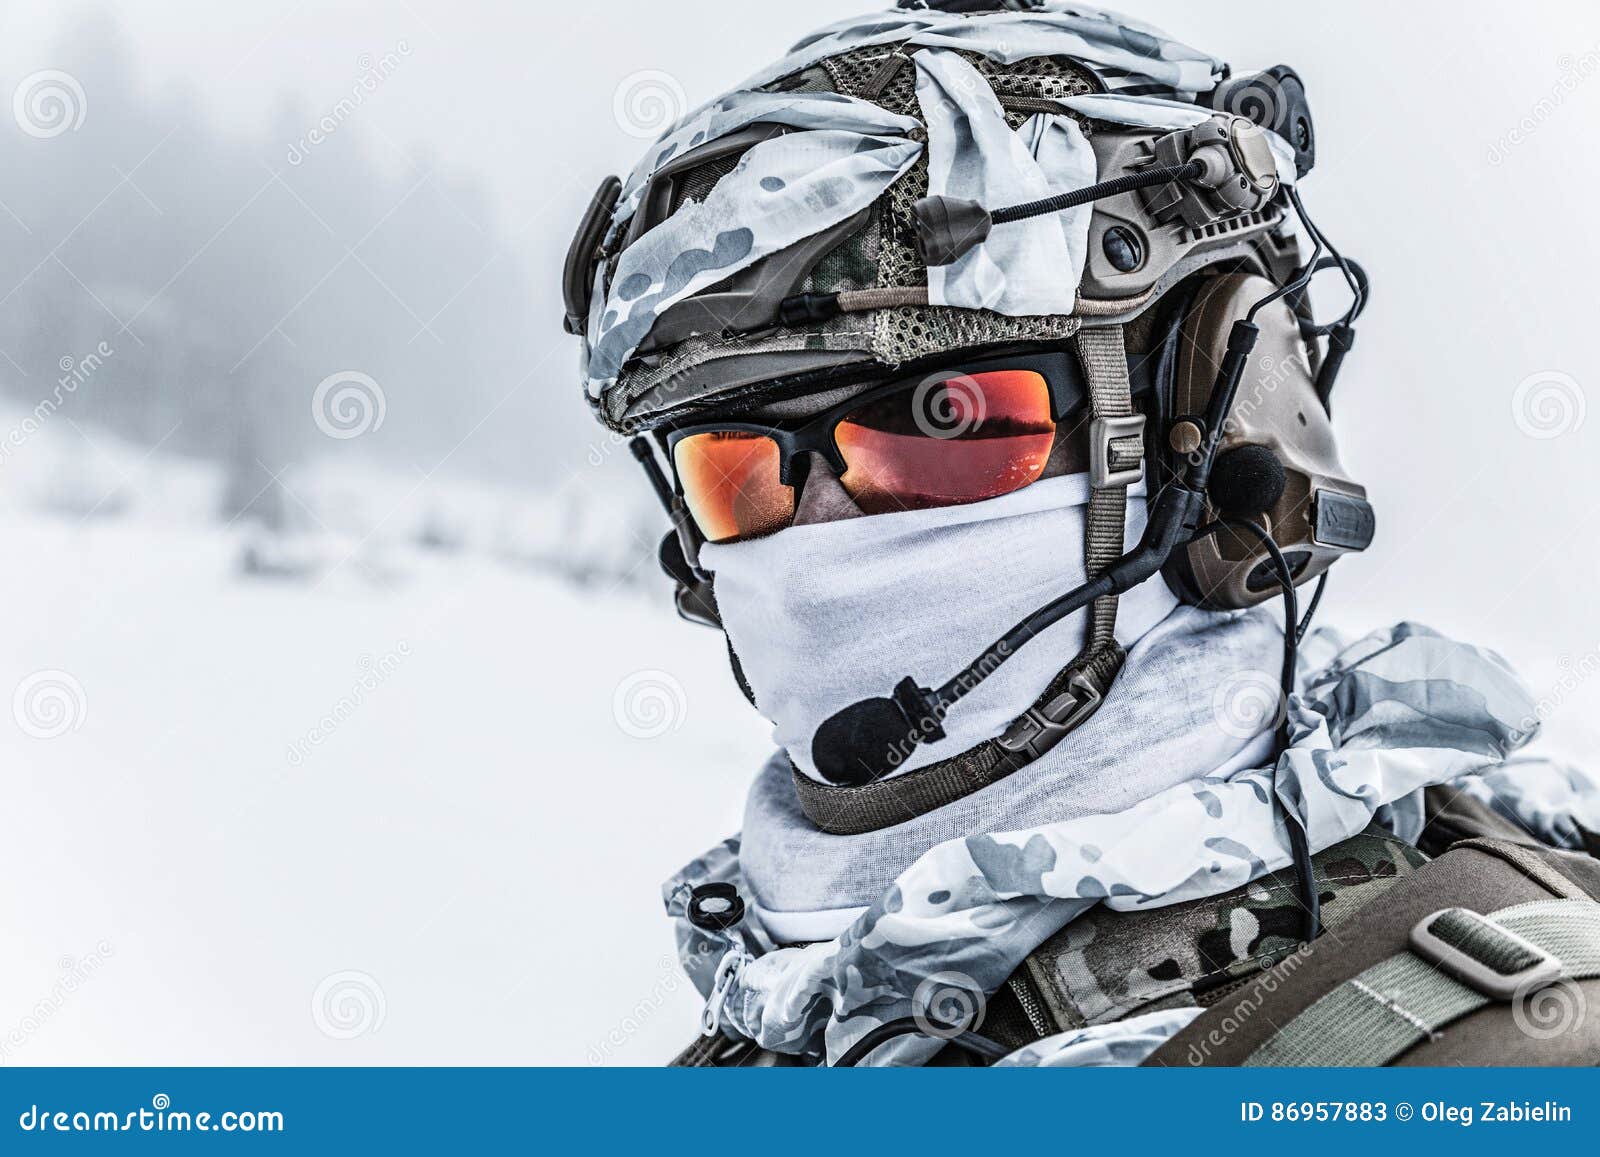 winter arctic warfare